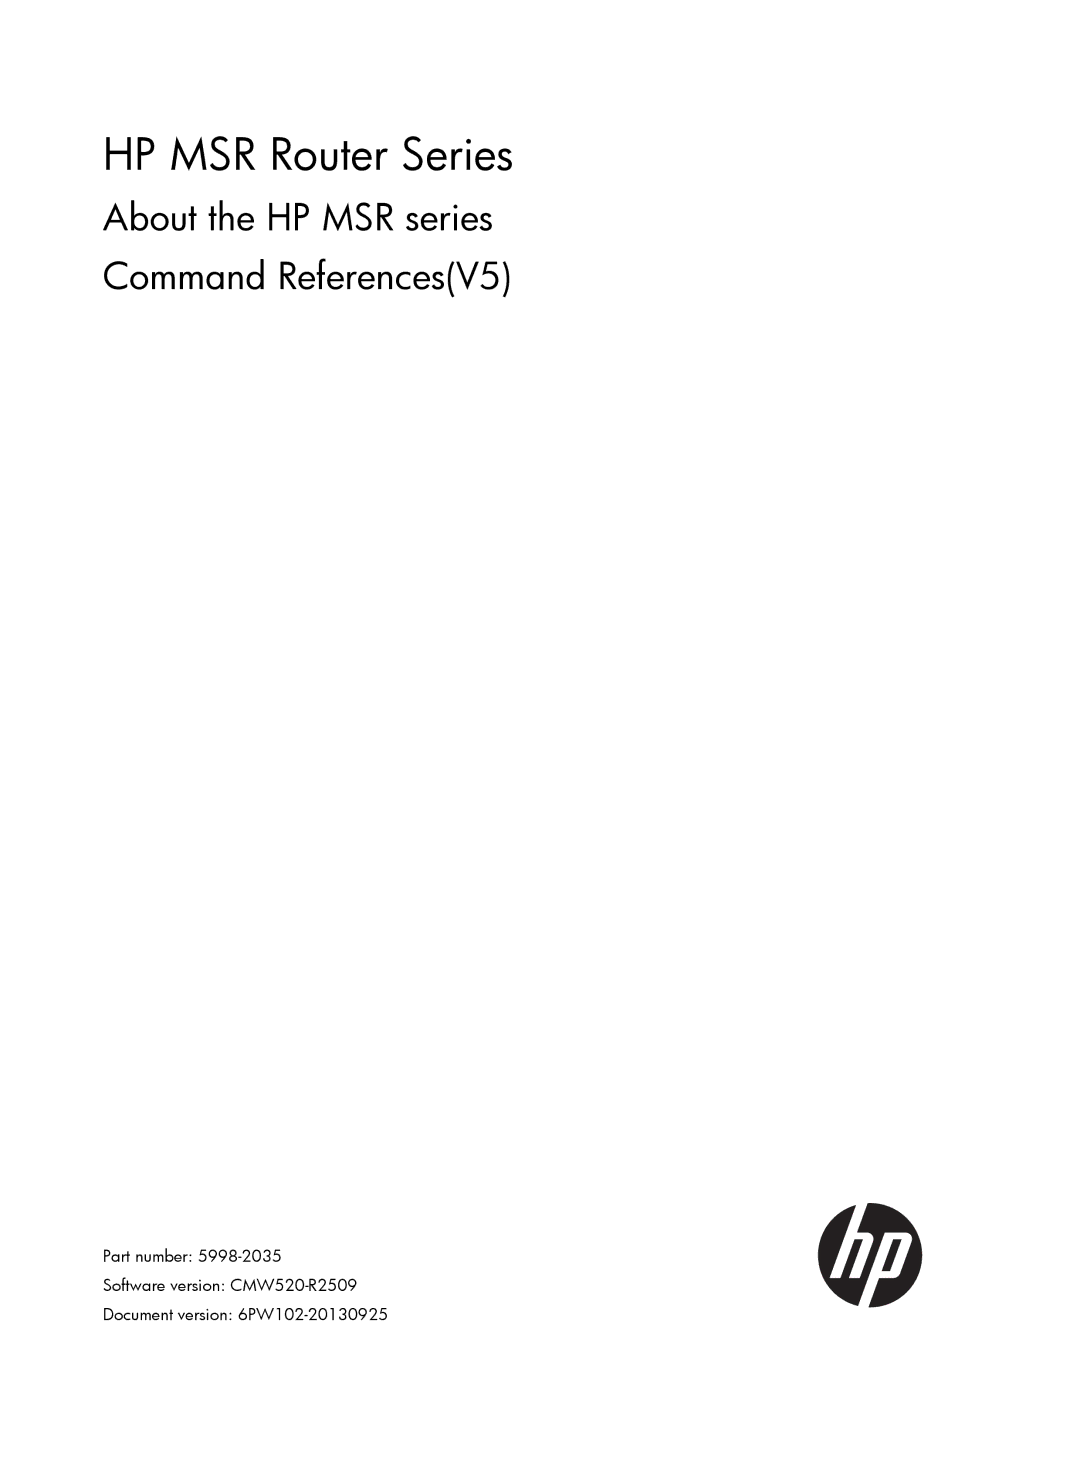 HP MSR20-1x manual HP MSR Router Series 